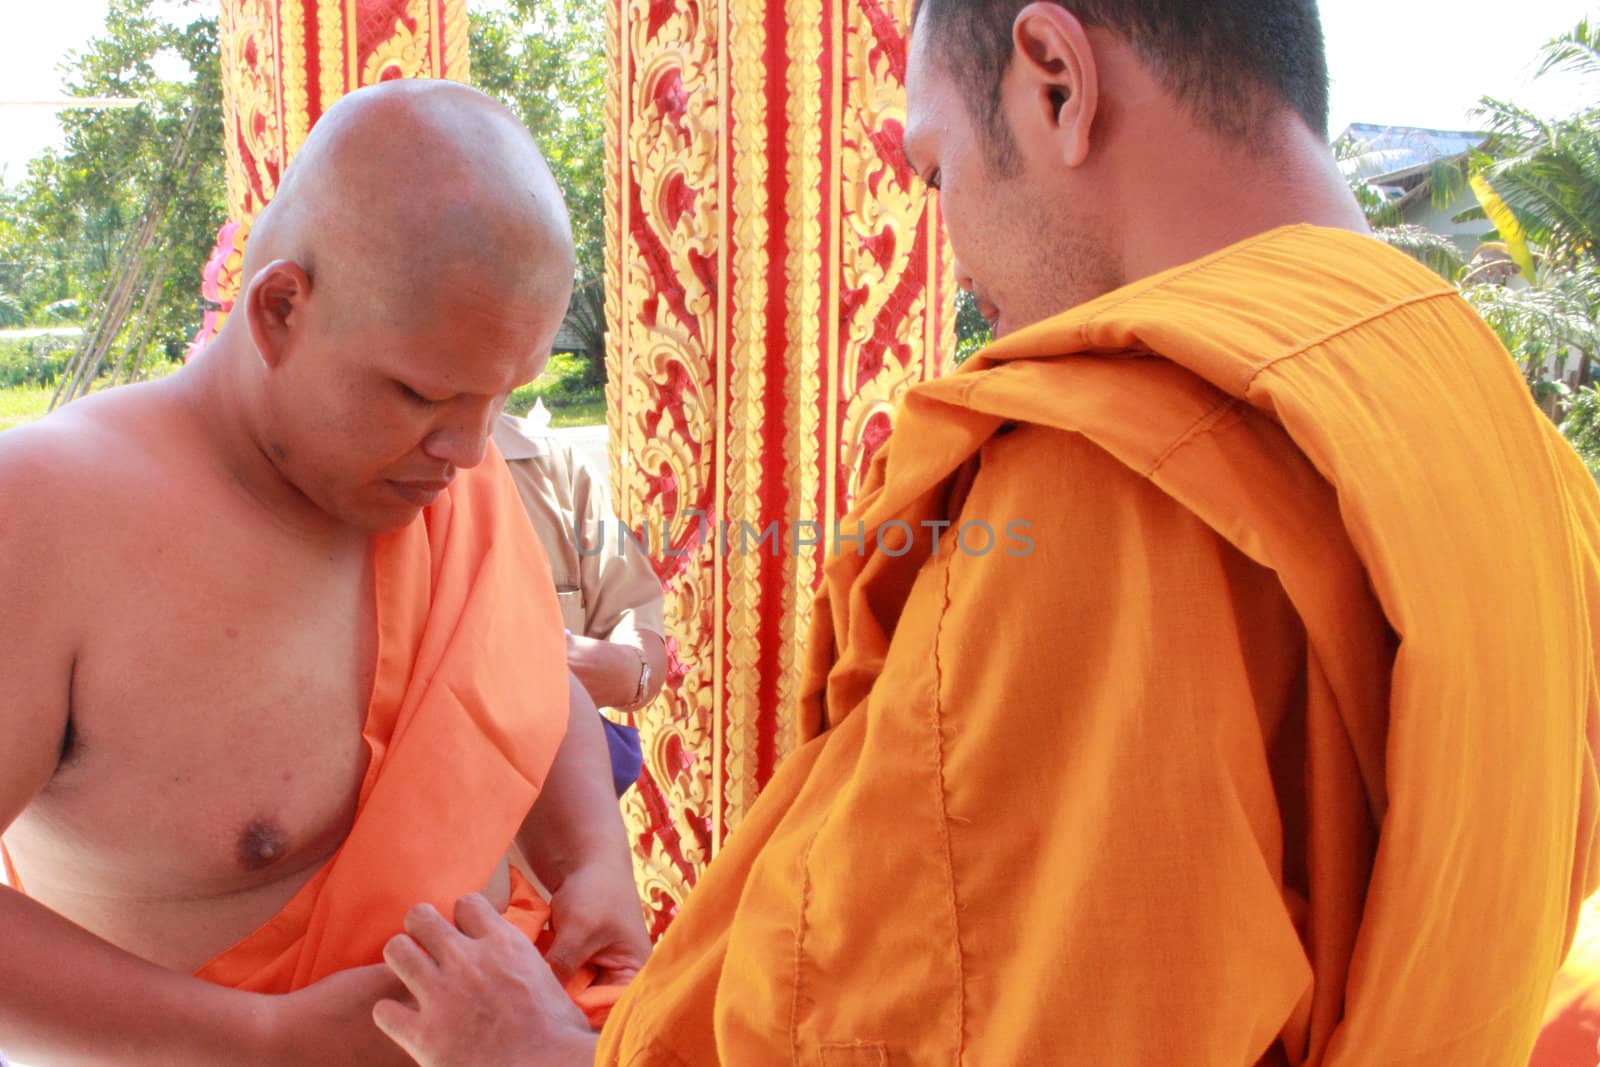 NAKON SI THAMMARAT, THAILAND - NOVEMBER 17 : The senior monk dress the new monk in the Newly Buddhist ordination ceremony on November 17, 2012 in Nakon Si Thammarat, Thailand.